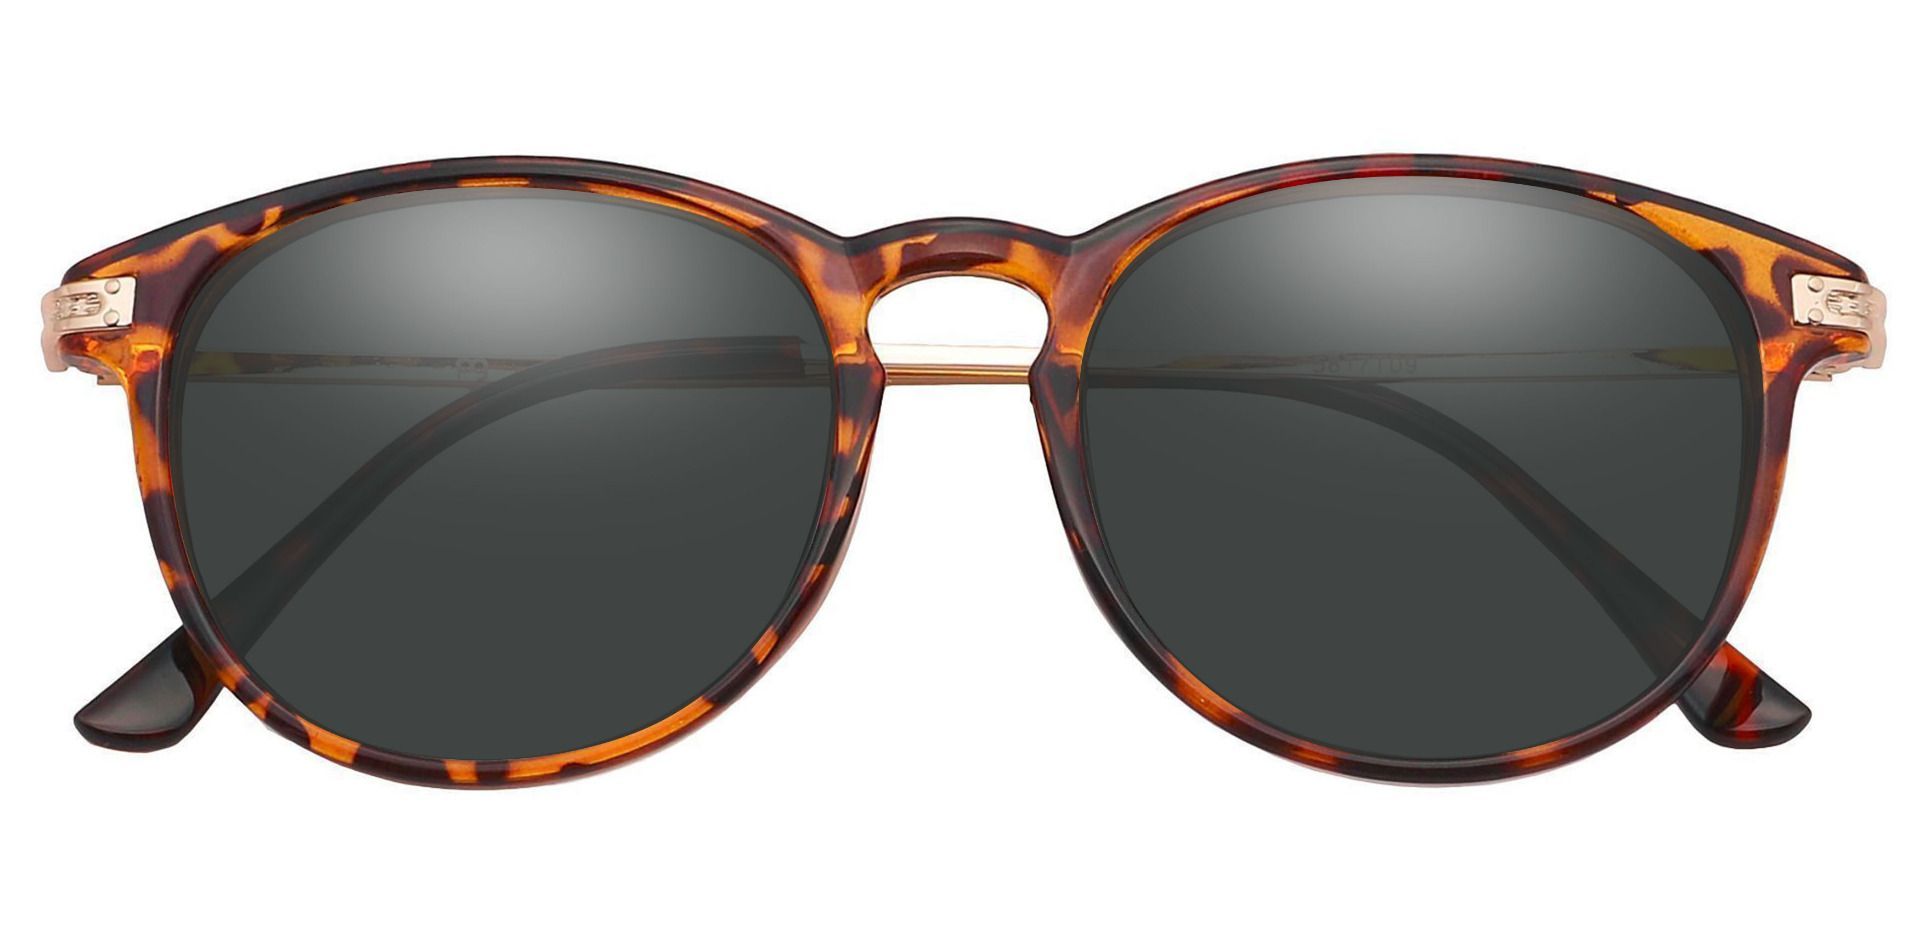 Rojo Round Prescription Sunglasses - Tortoise Frame With Gray Lenses